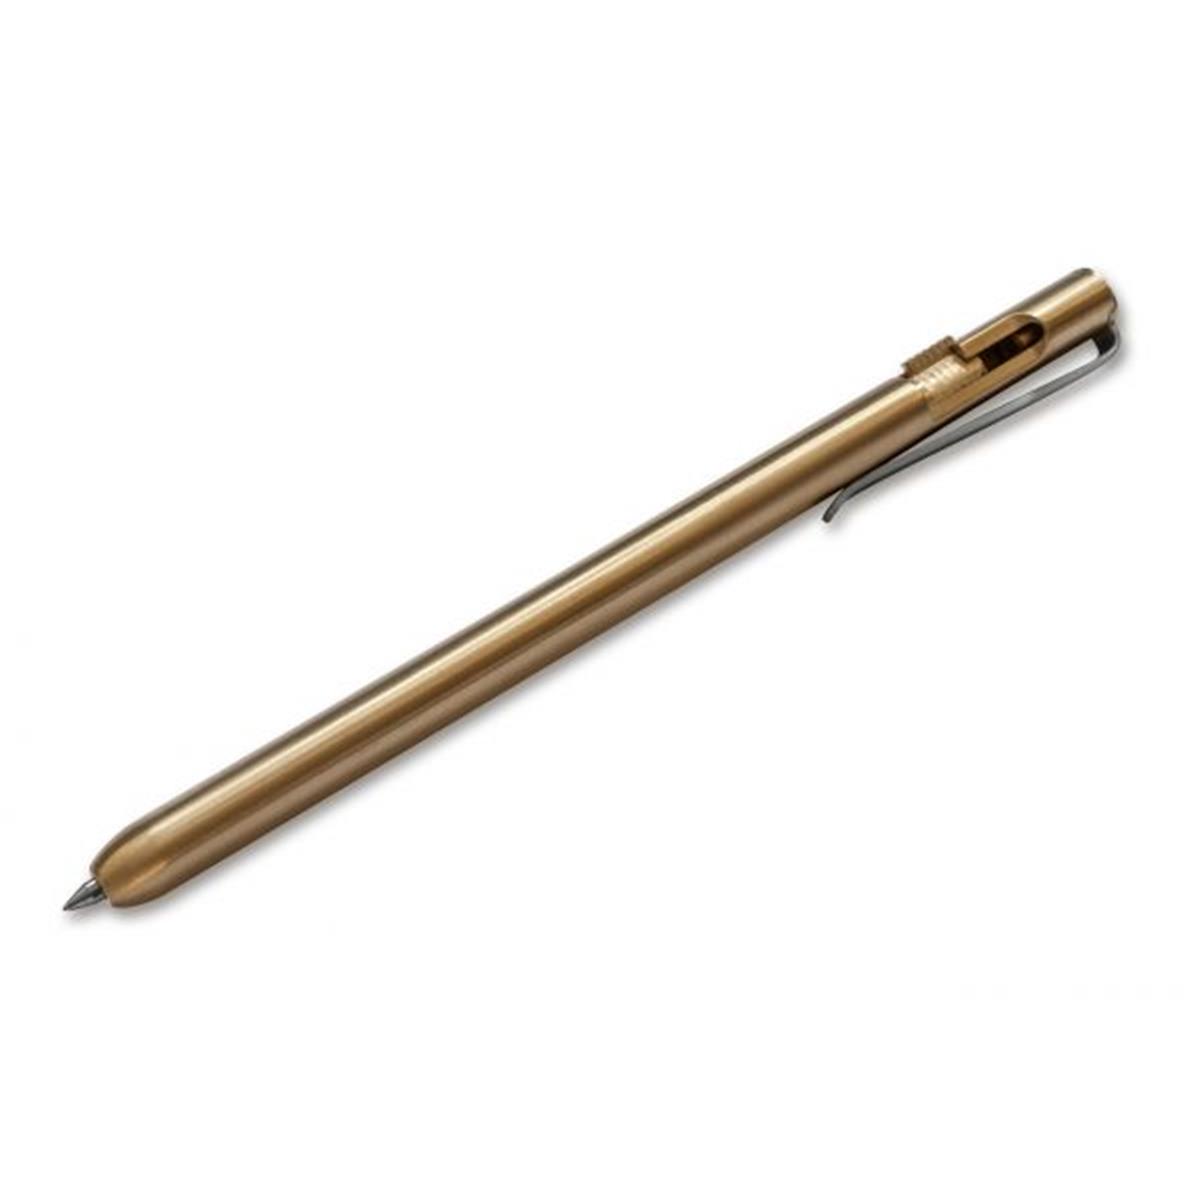 09bo062 Tactical Rocket Pen - Gold, Brass